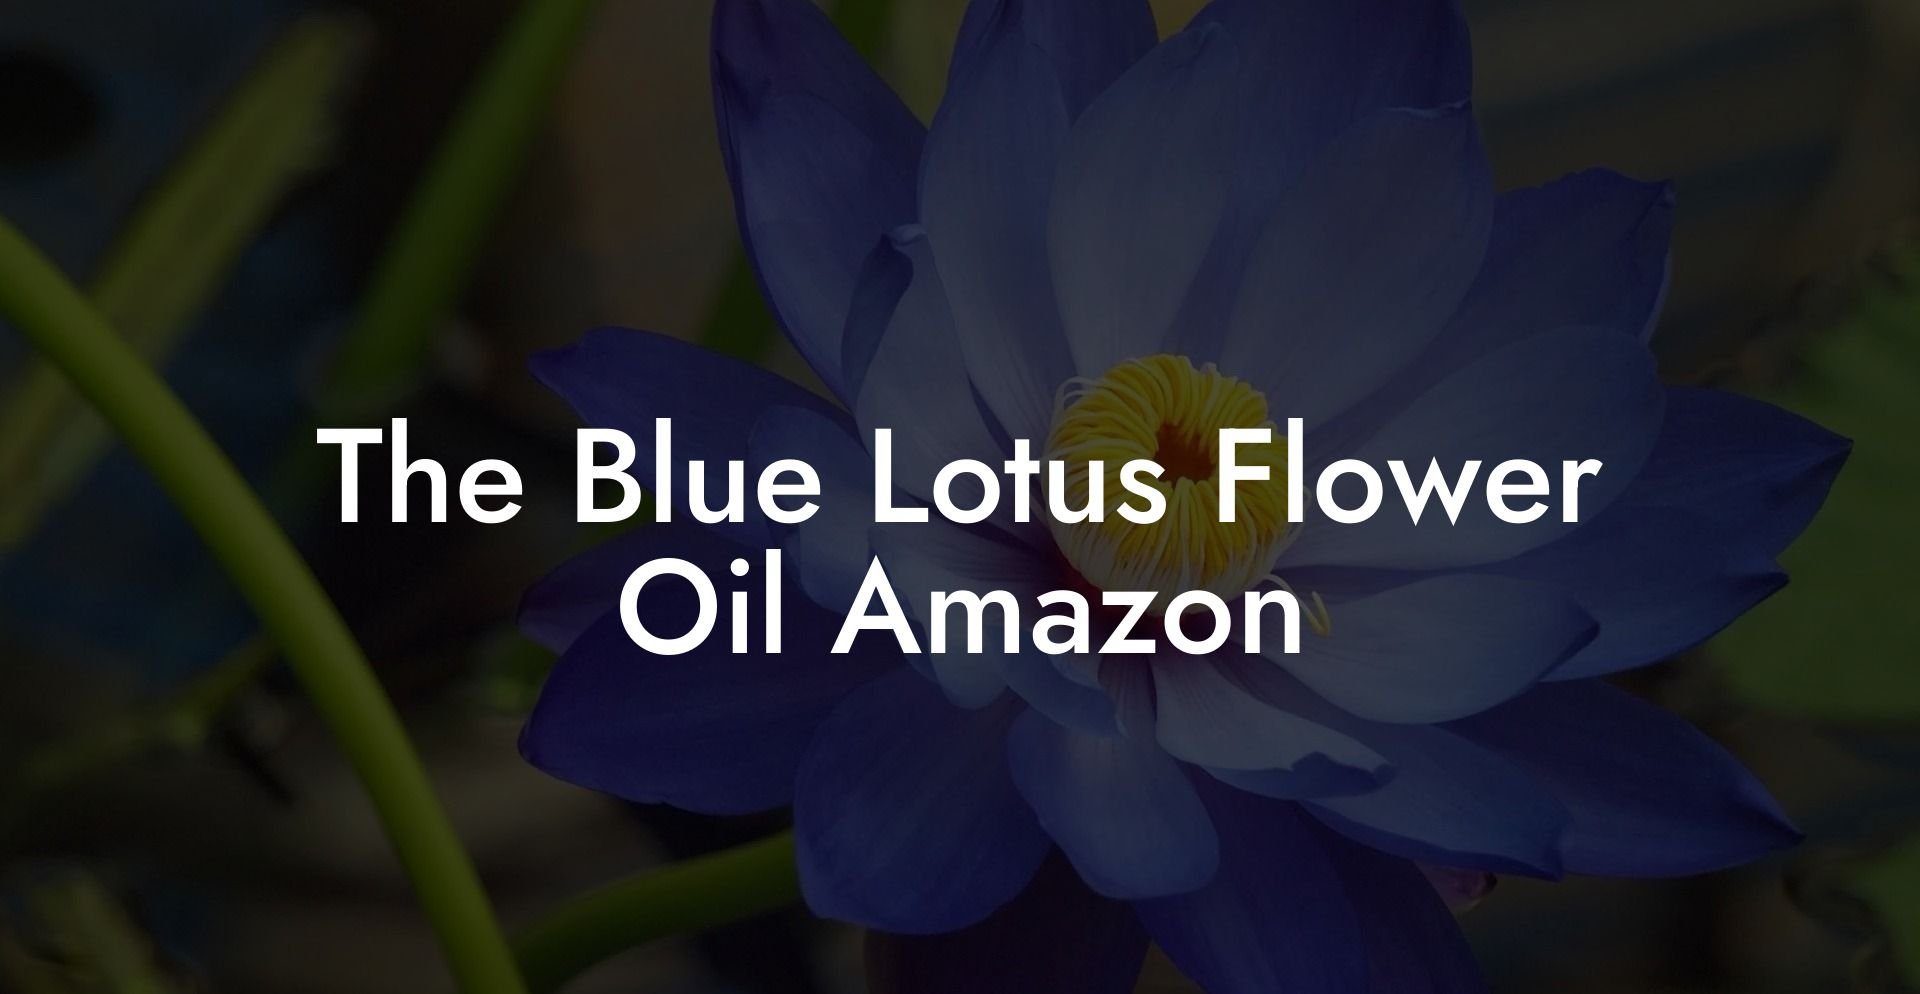 The Blue Lotus Flower Oil Amazon